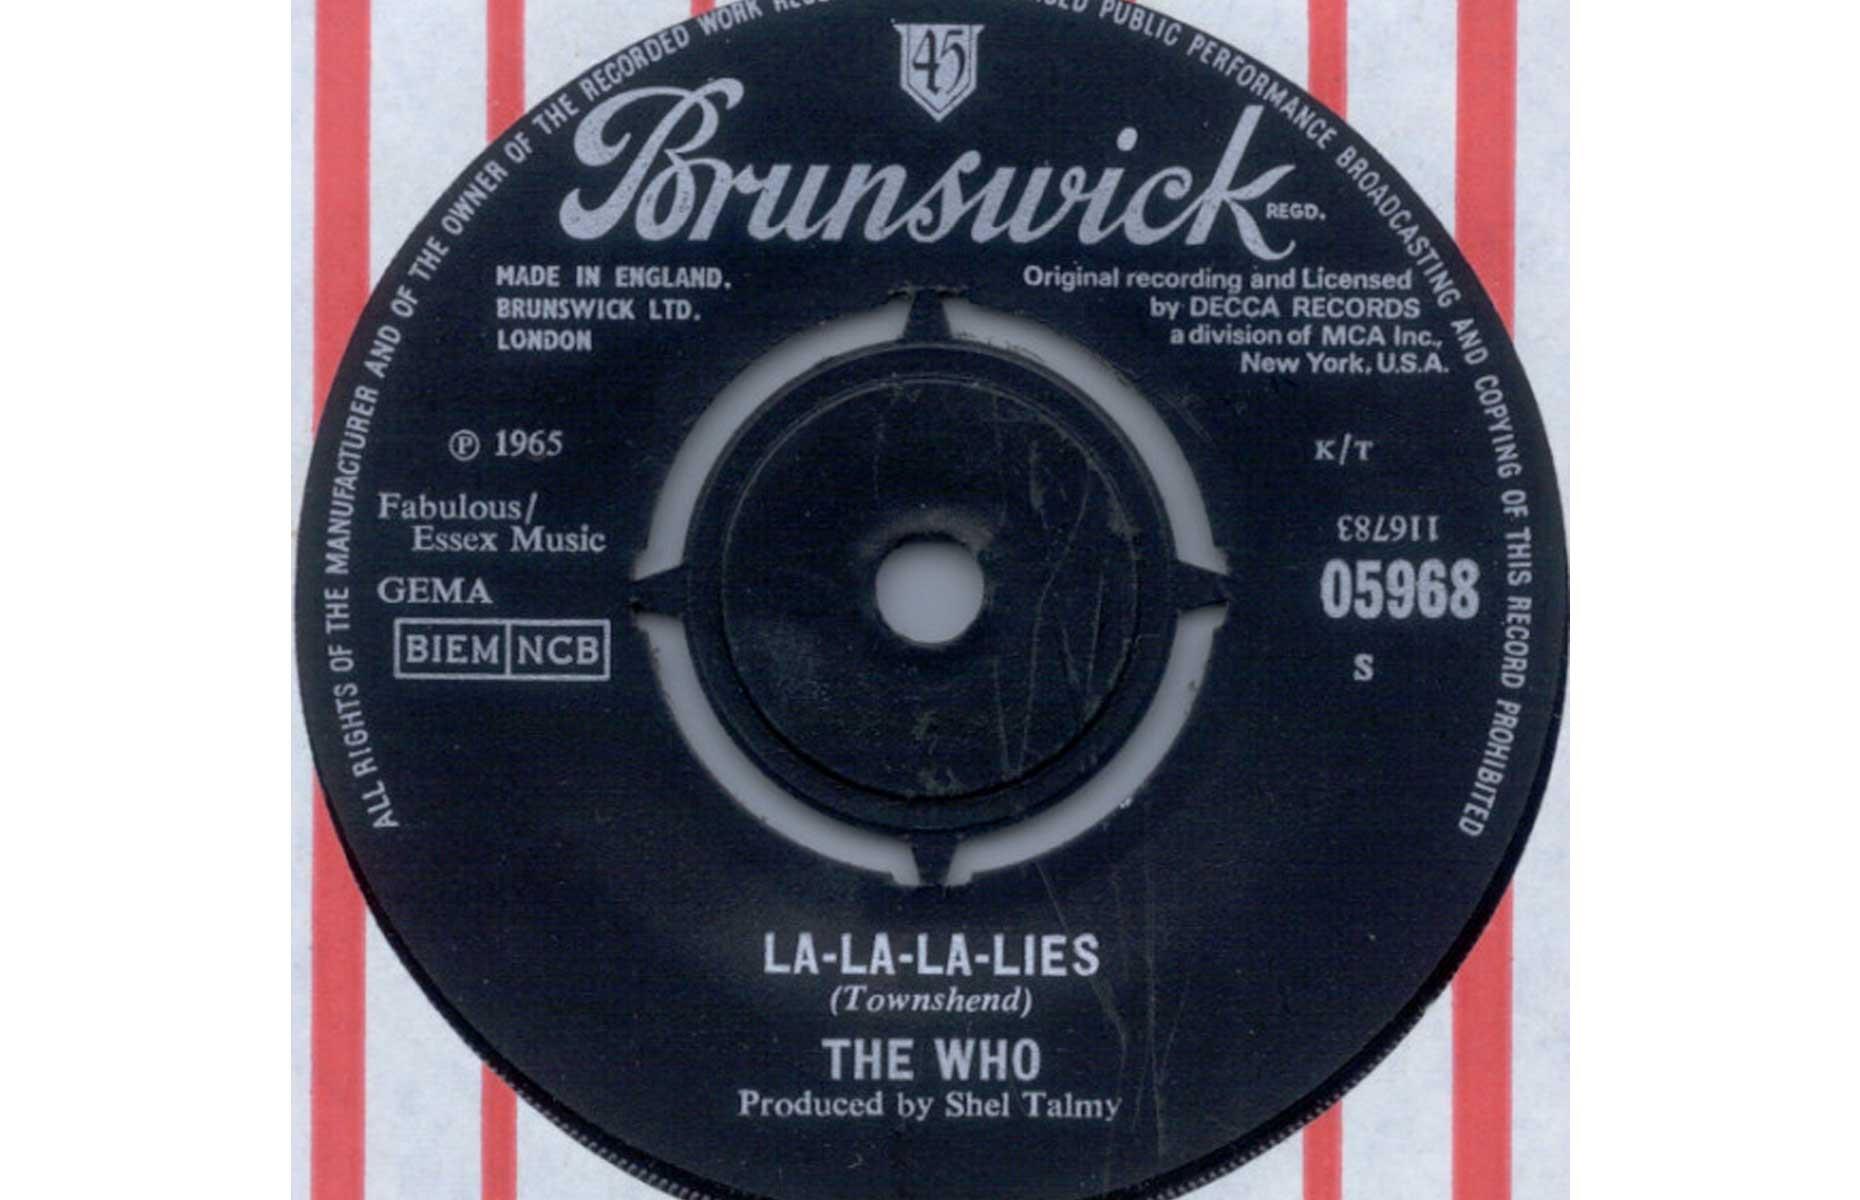 The Who – La-La-La-Lies: up to £400